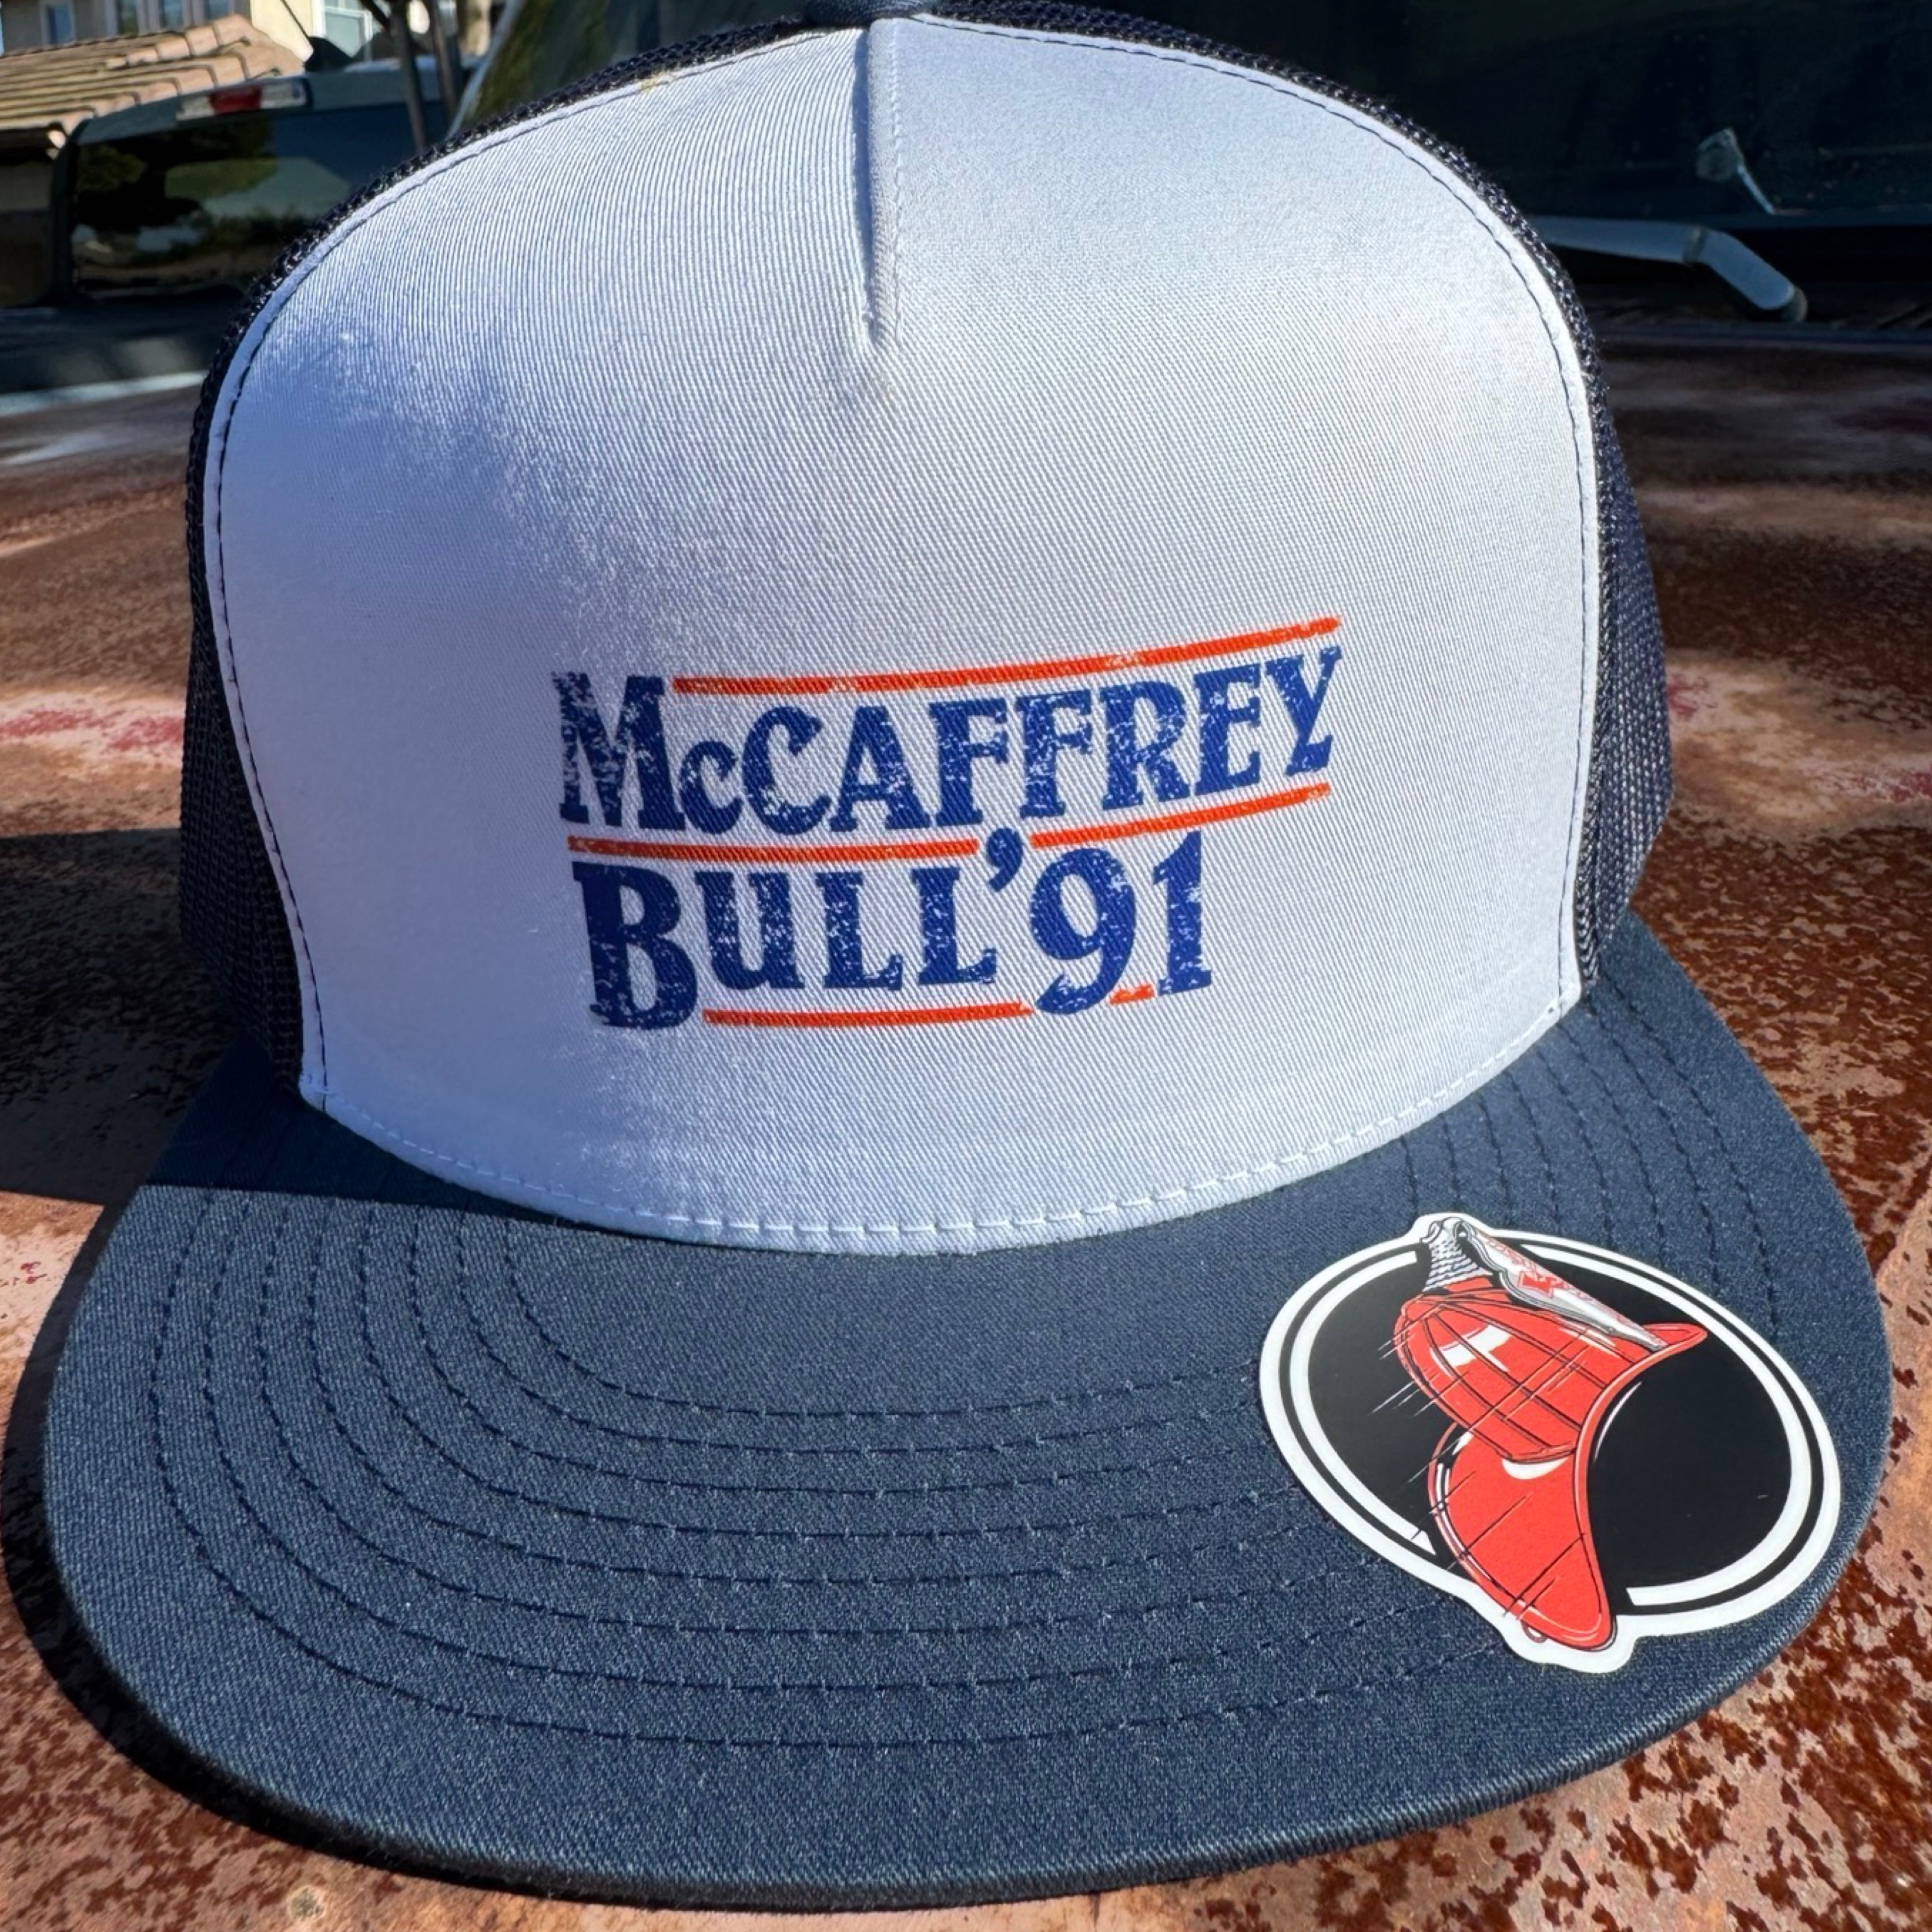 McCaffrey Bull 91' Hat